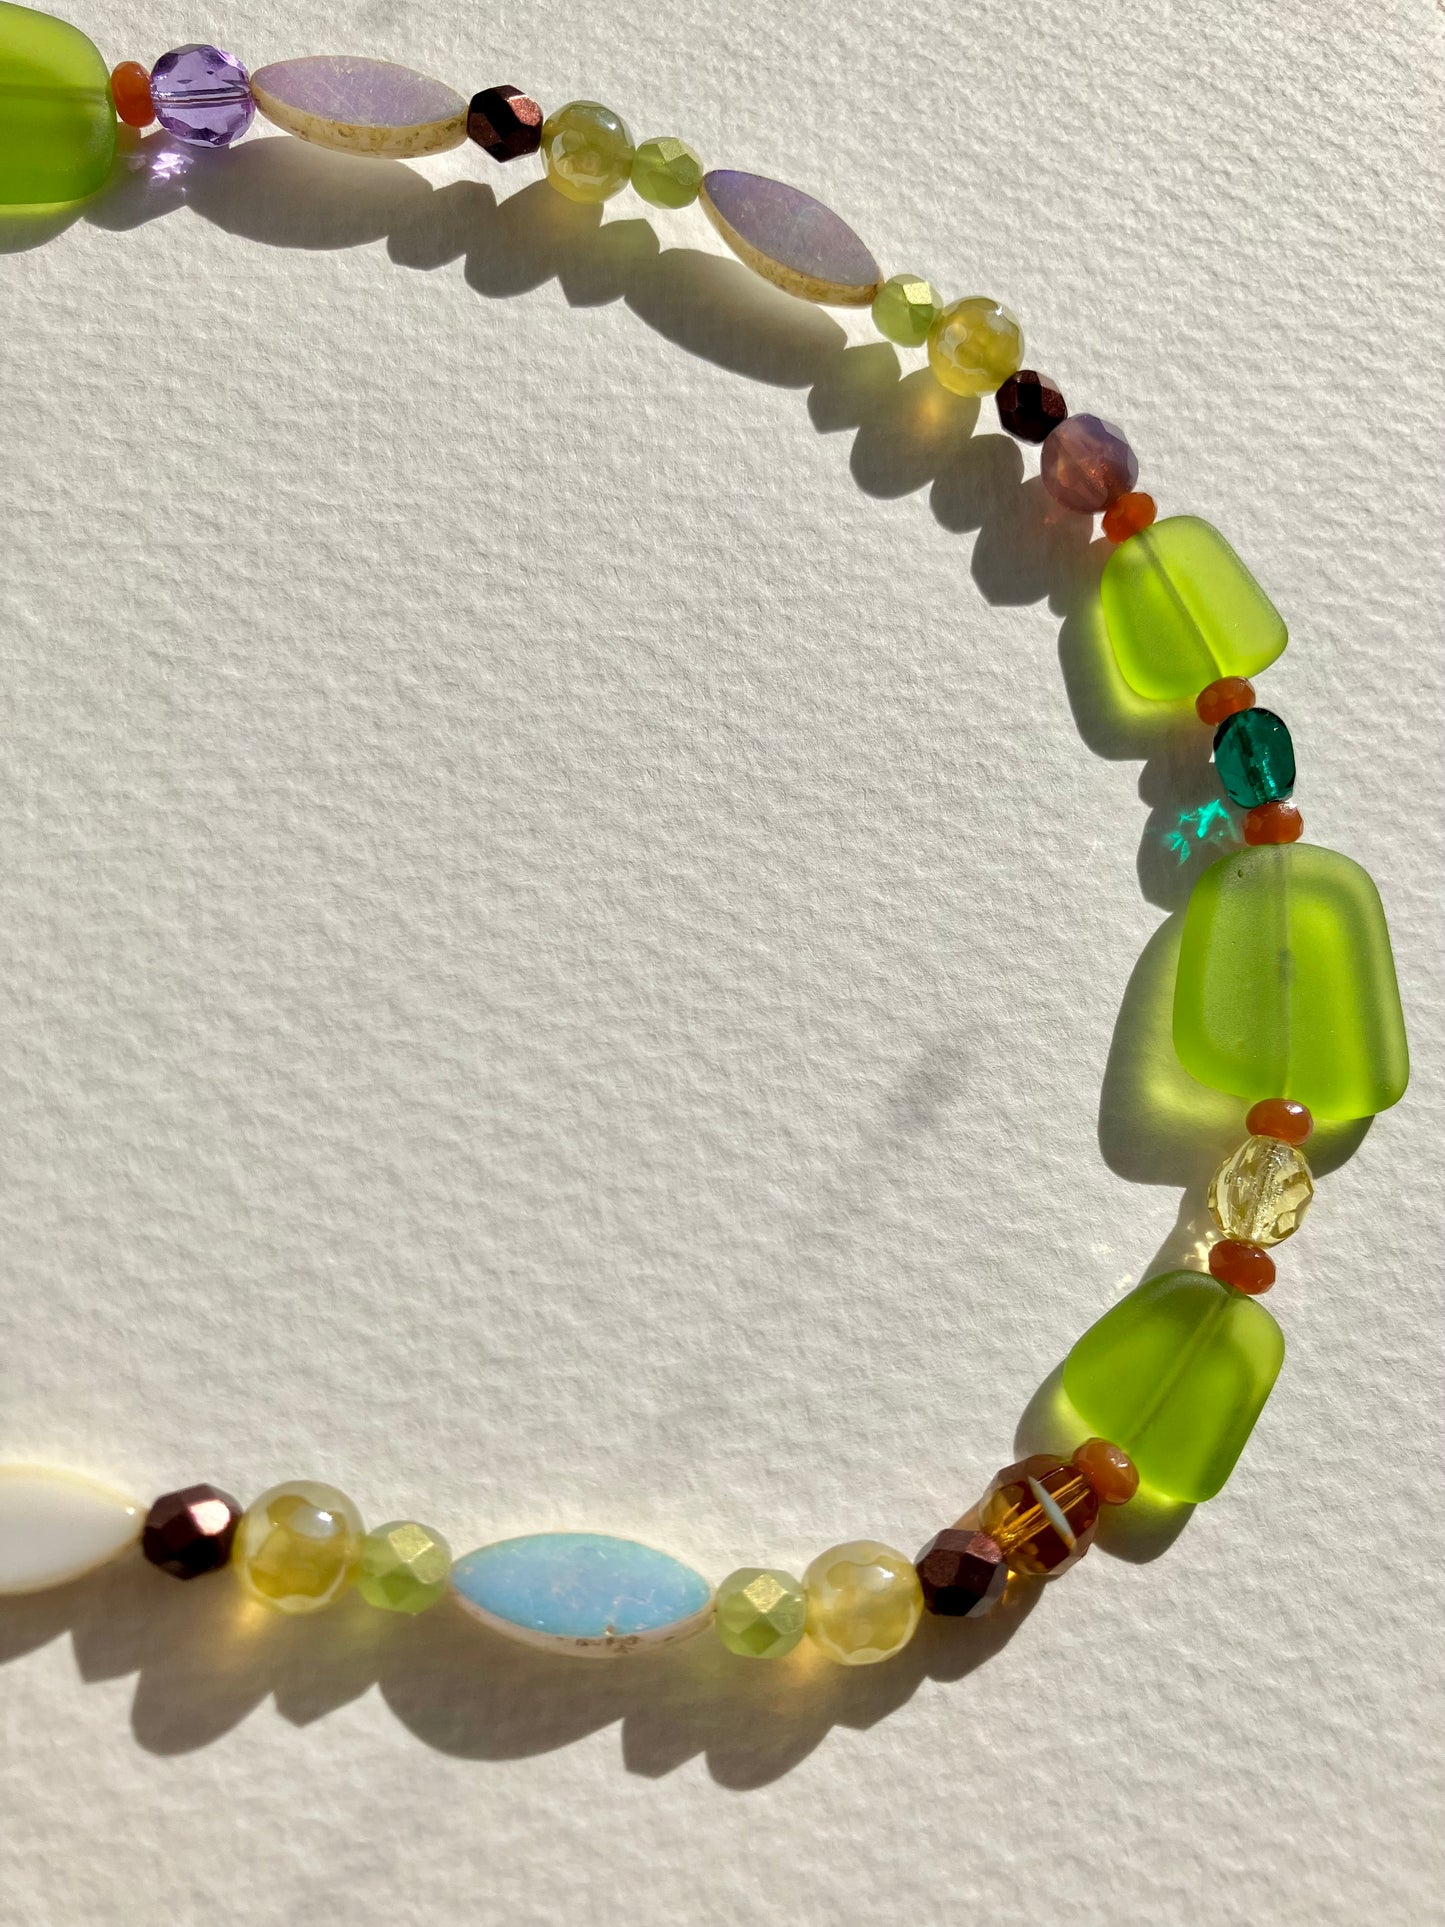 "Olivia" Handmade Glass Beaded Statement Necklace